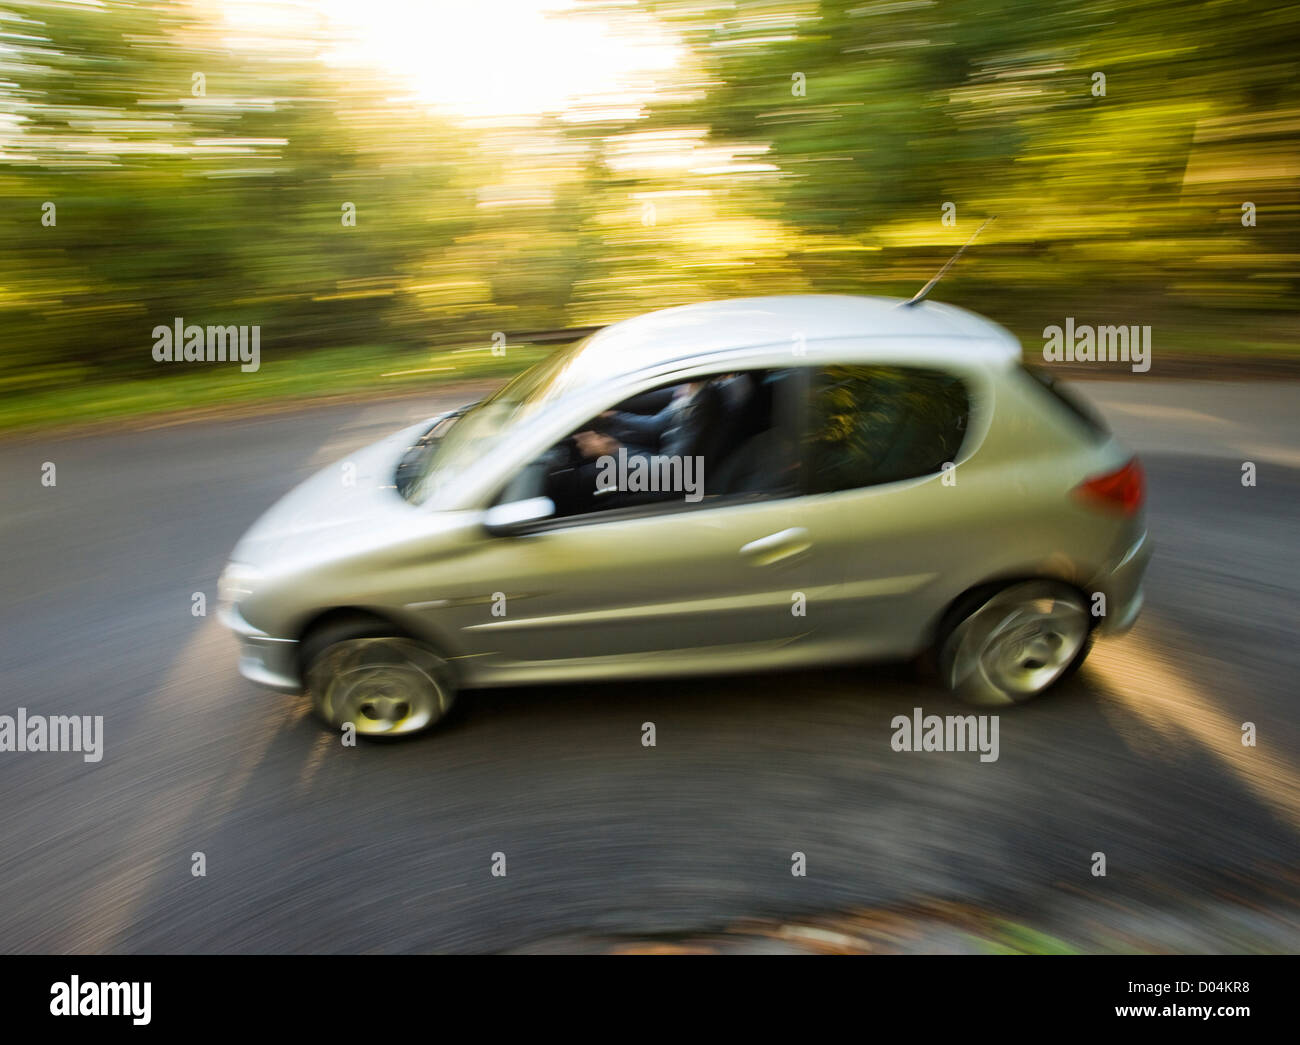 Car going round sharp bend. Stock Photo